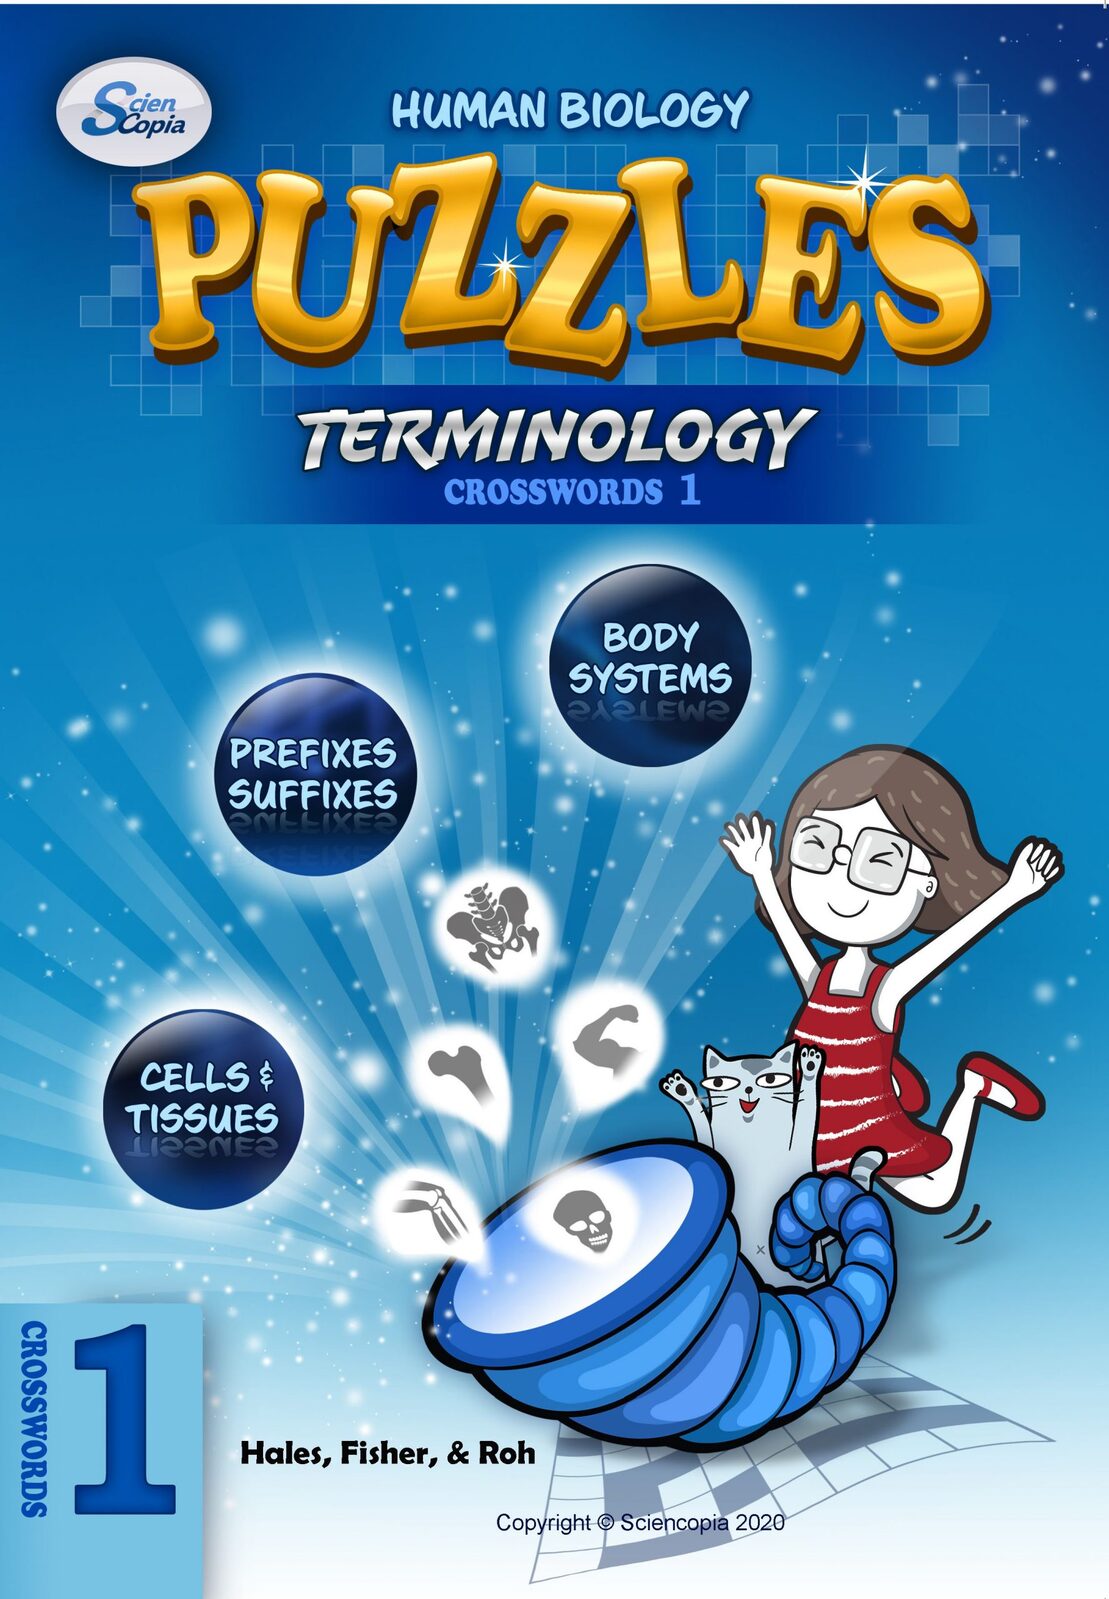 Human Biology Puzzles Terminology (Book 1)